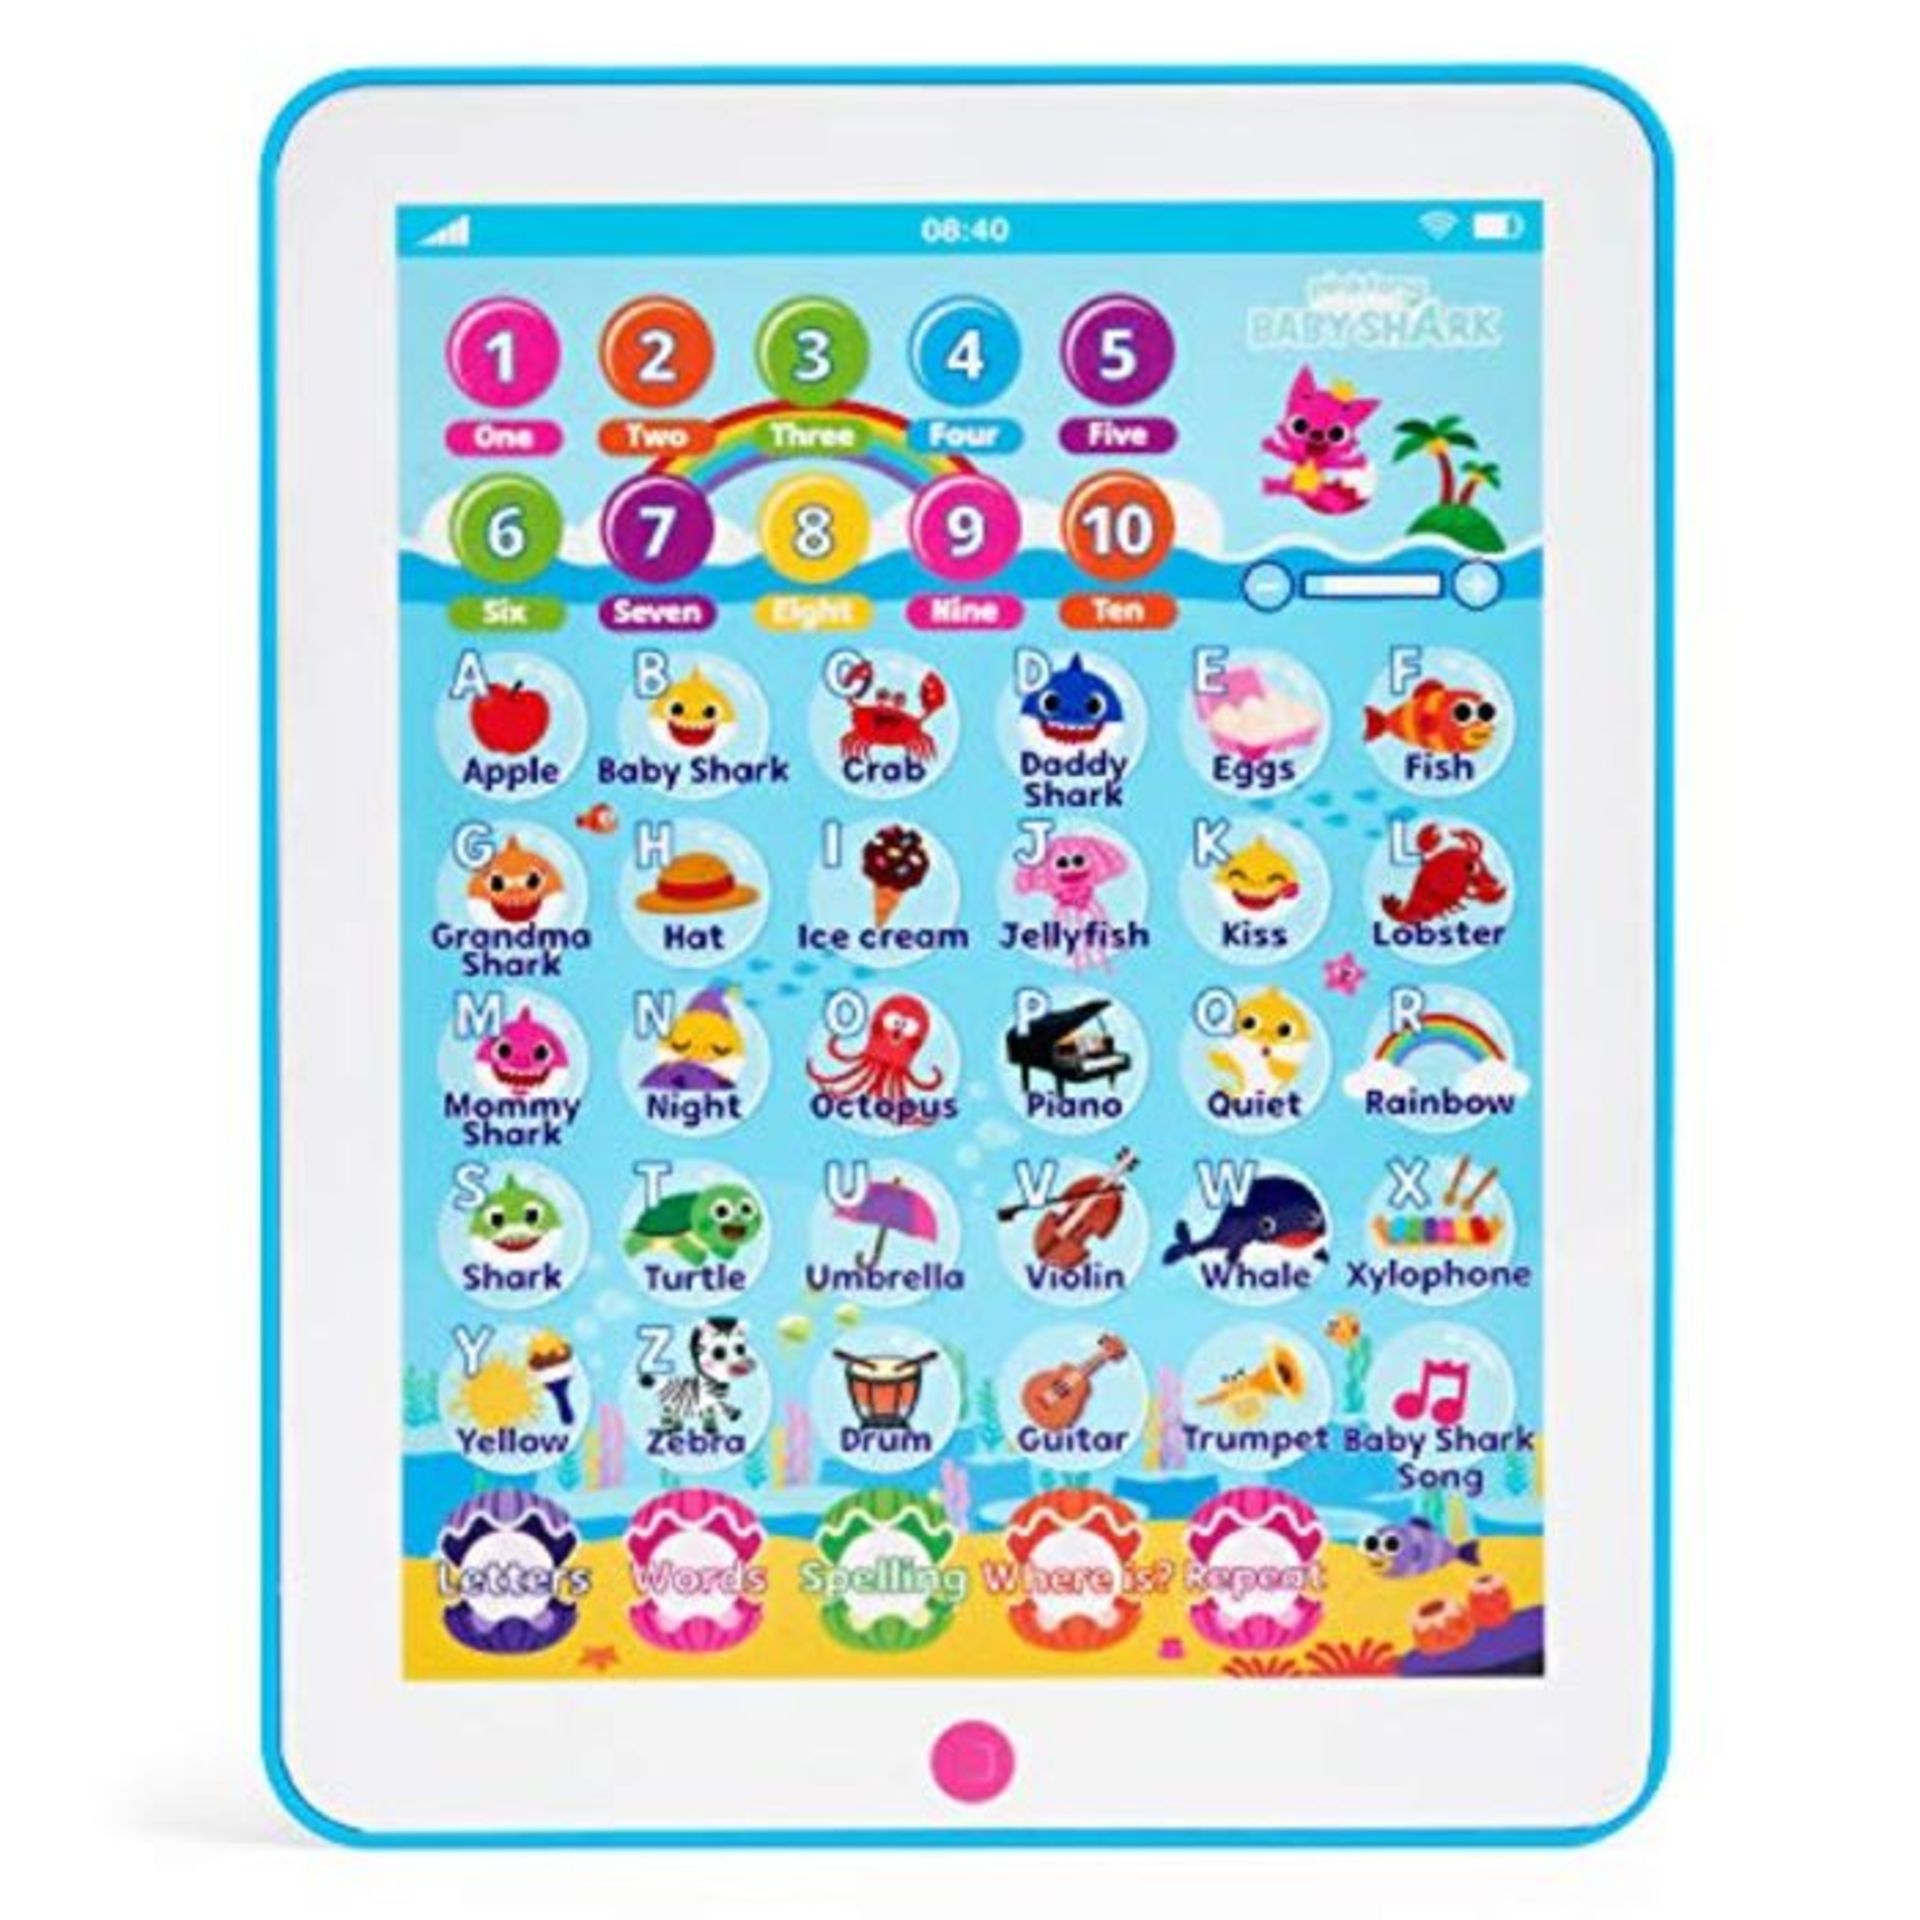 Pinkfong Baby Shark 61069 WowWee Pinkfong Tablet - Educational Preschool Toy